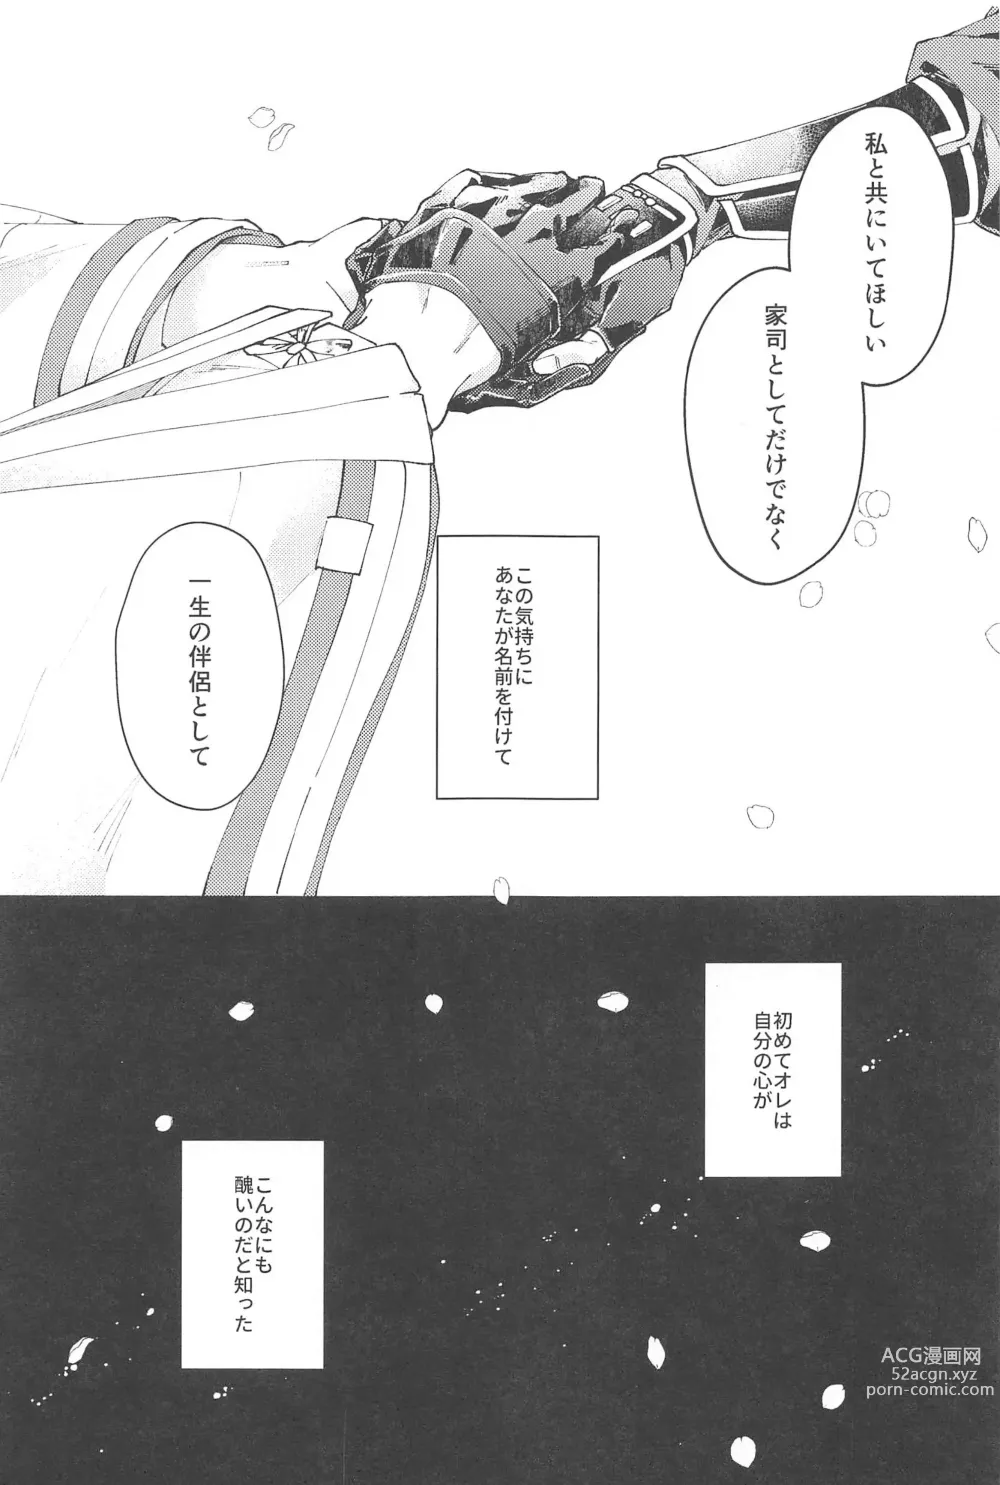 Page 2 of doujinshi Zenbu Kimi no Mono